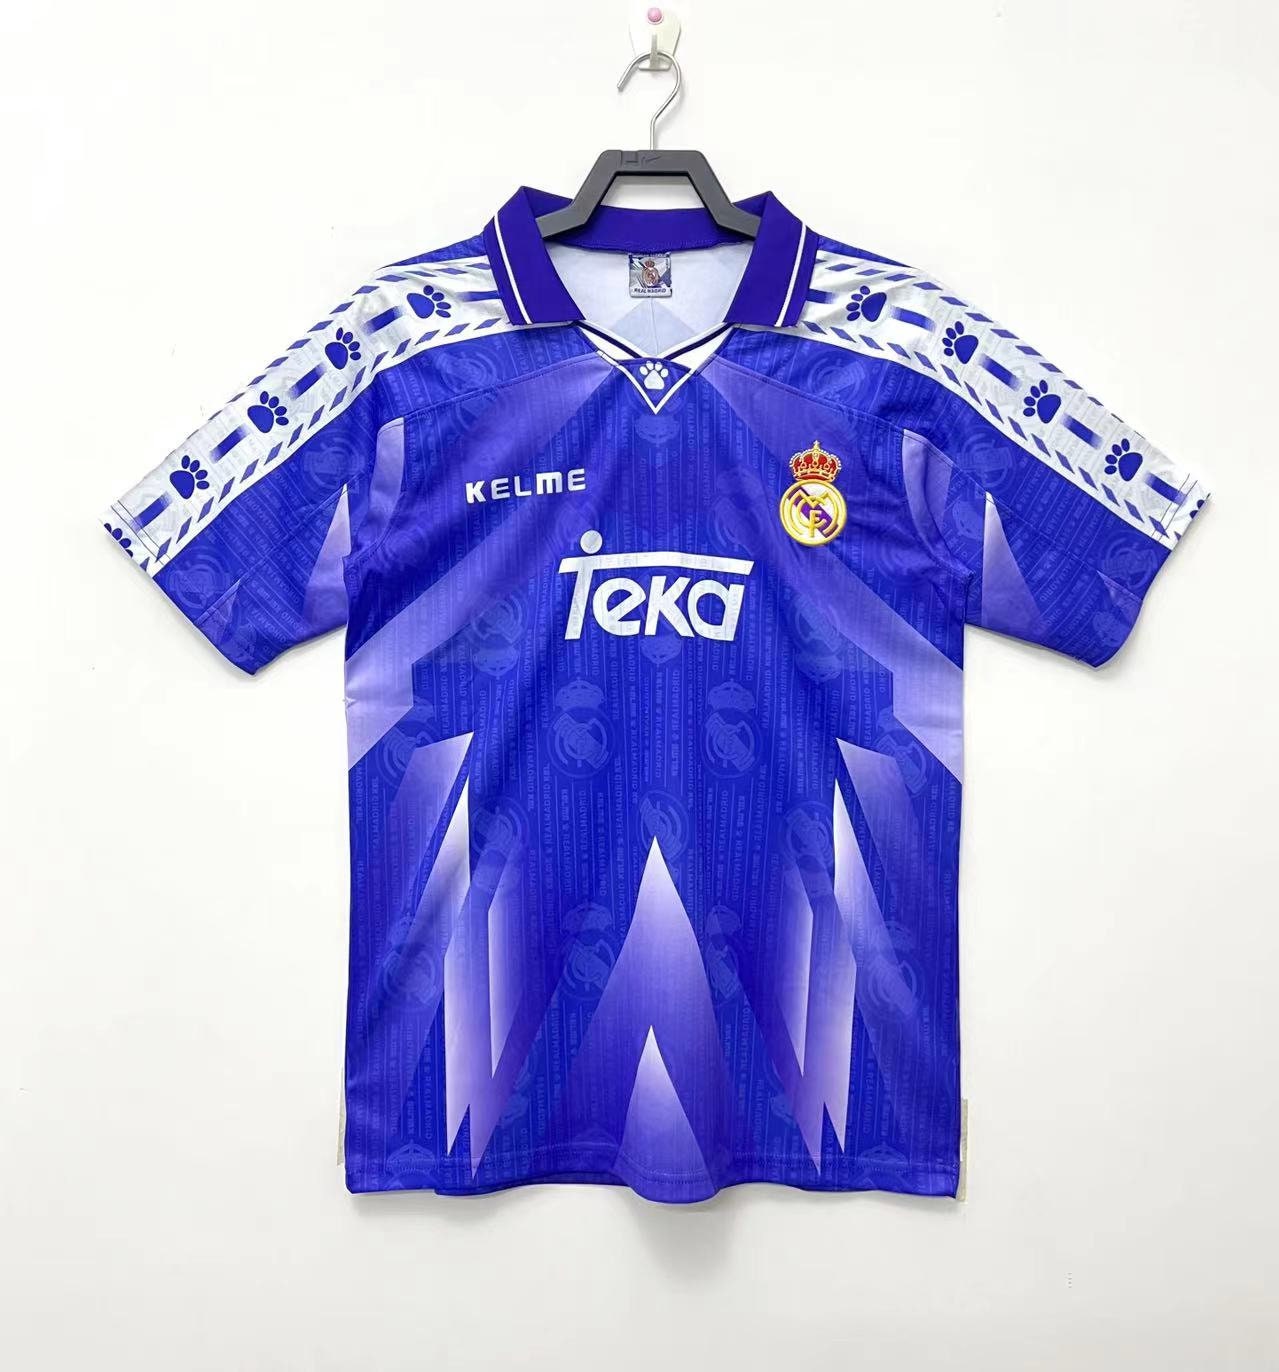 PES 2011 - Real Madrid New Kits 11/12 [Home & Away] + Download